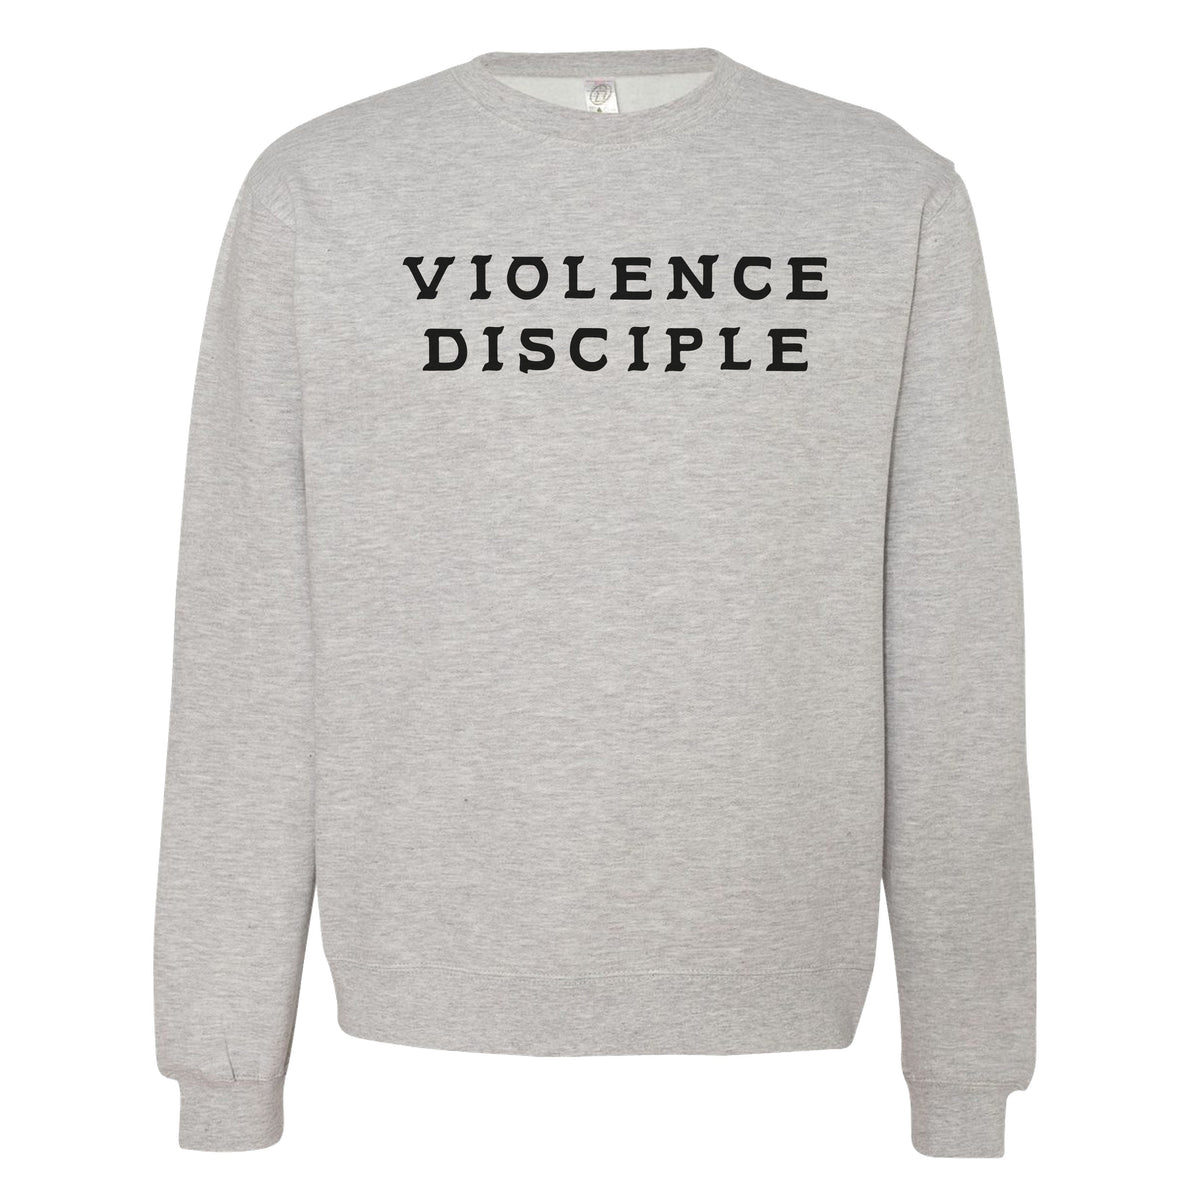 Violence Disciple Sweatshirt